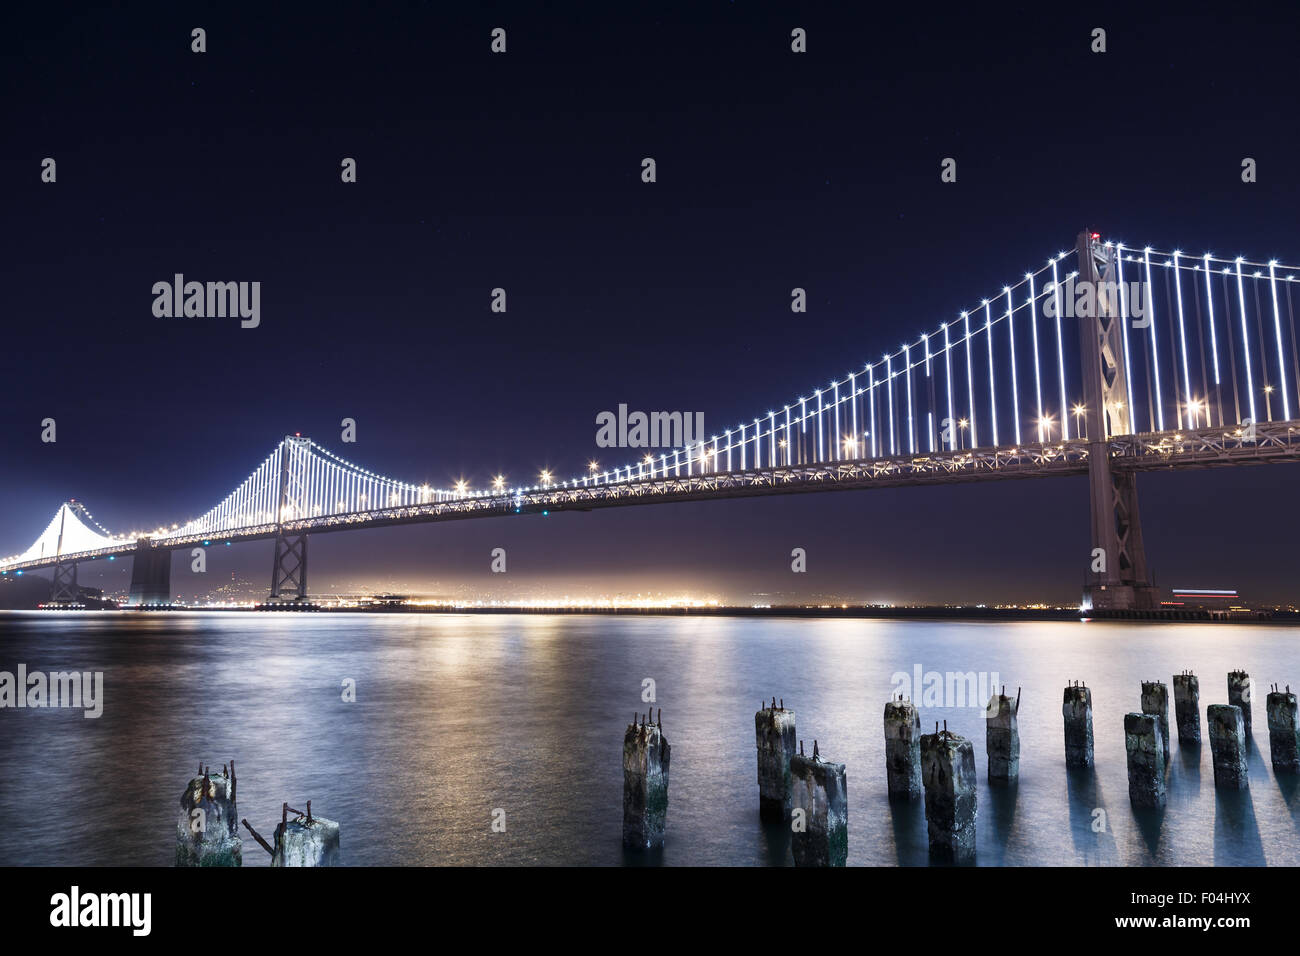 San Francisco-Oakland Bay Bridge illuminated at night Stock Photo